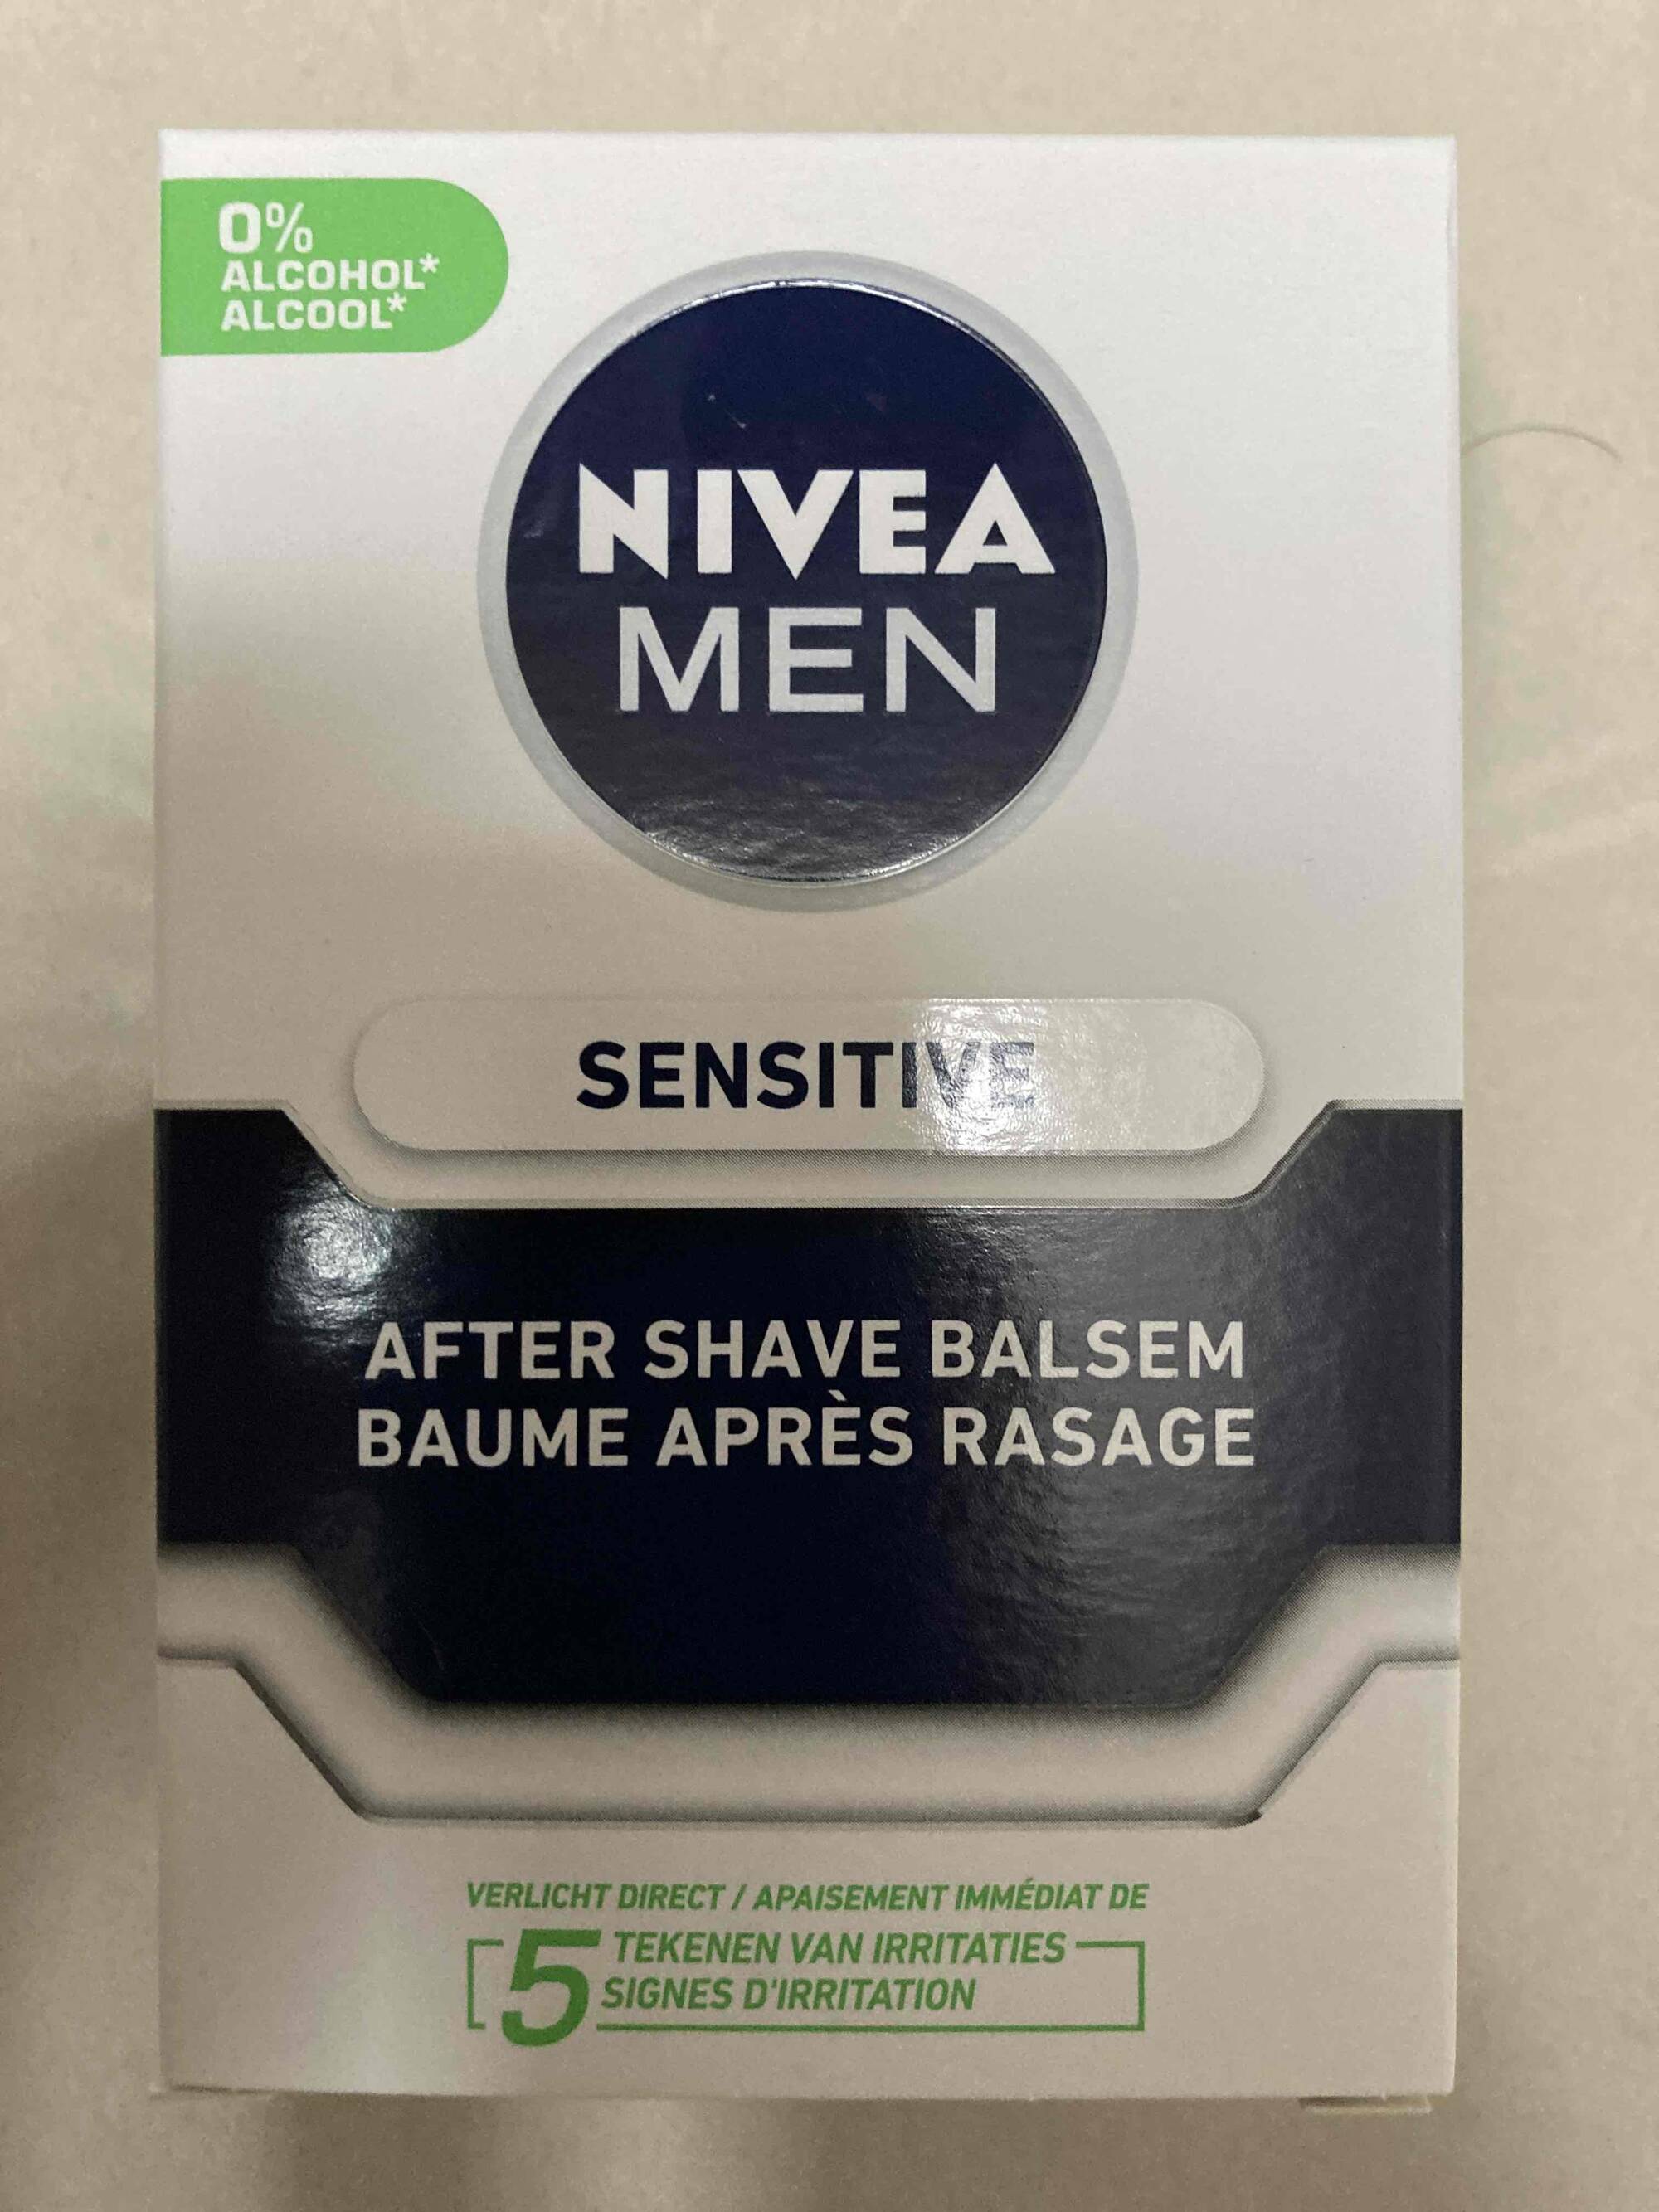 NIVEA MEN - Sensitive - Baume après rasage